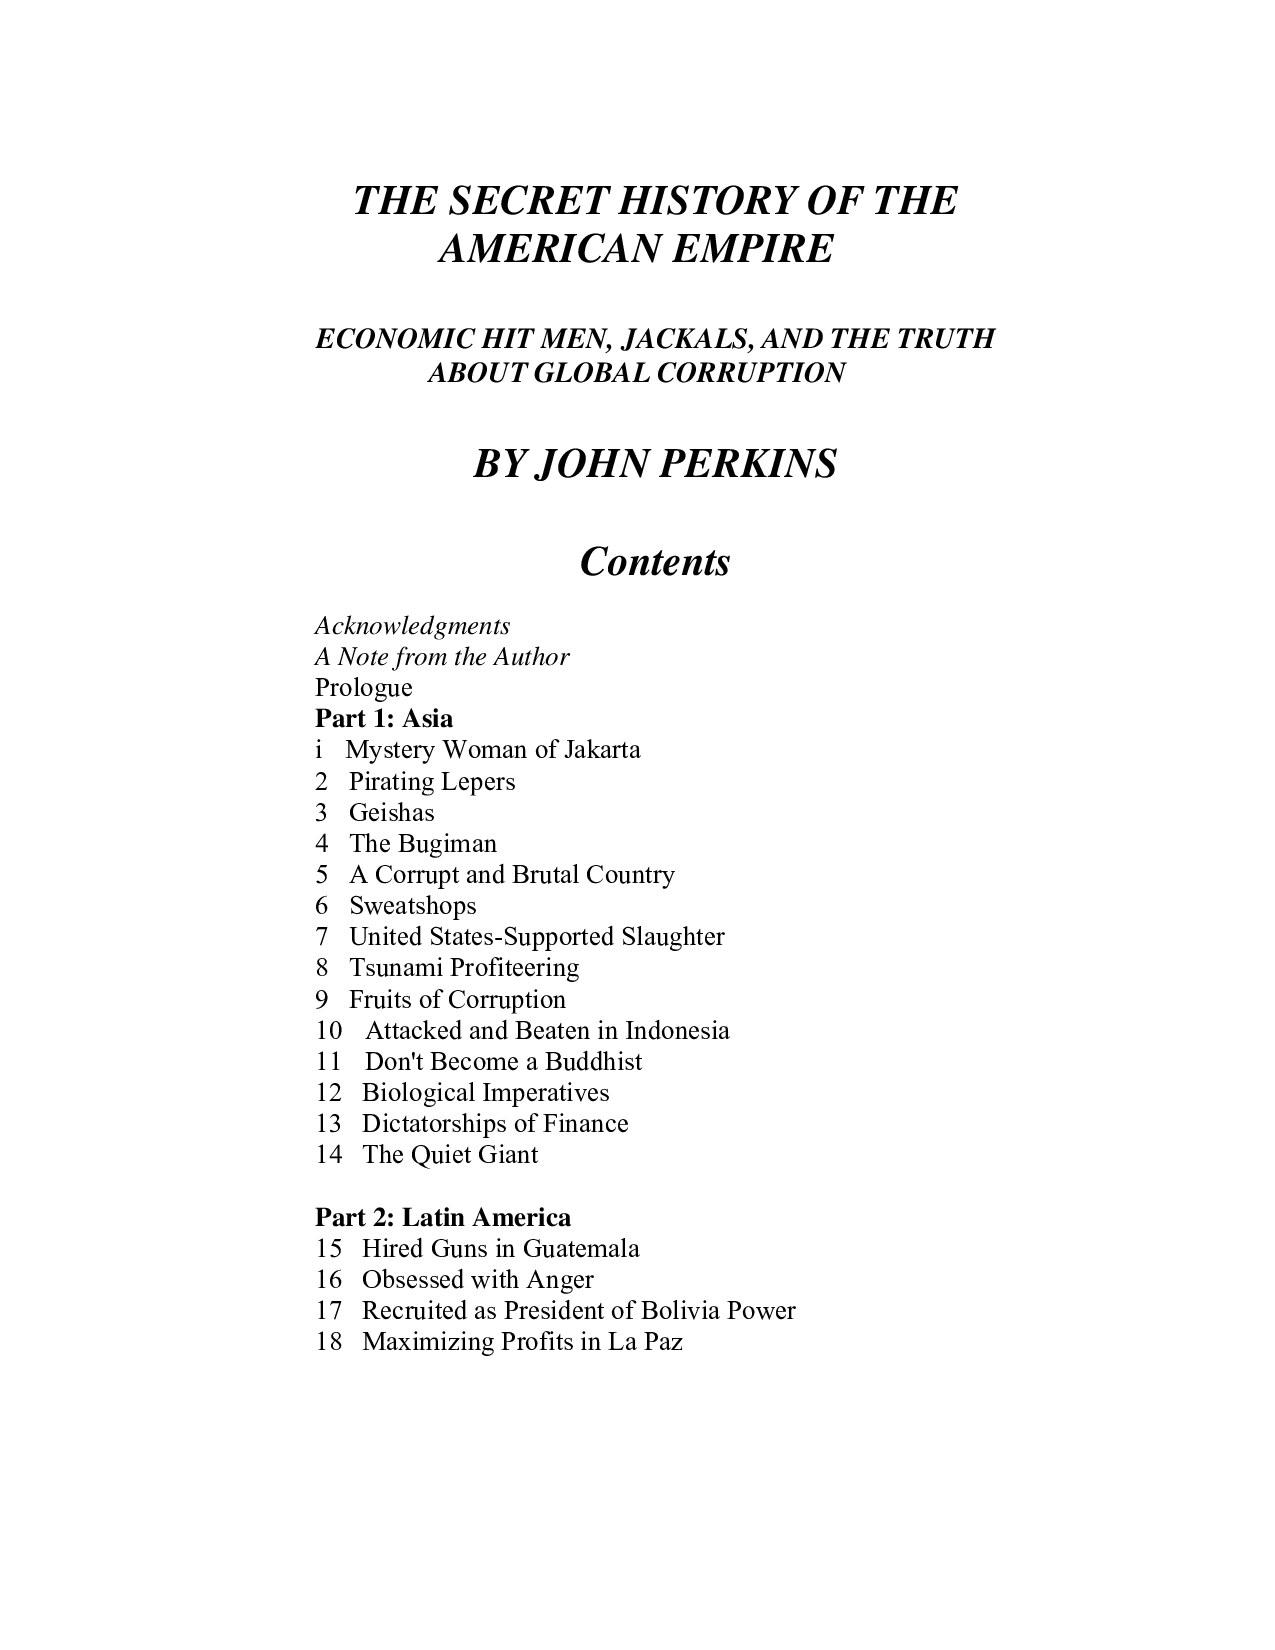 Microsoft Word - Perkins, John - Secret History of the American Empire.rtf